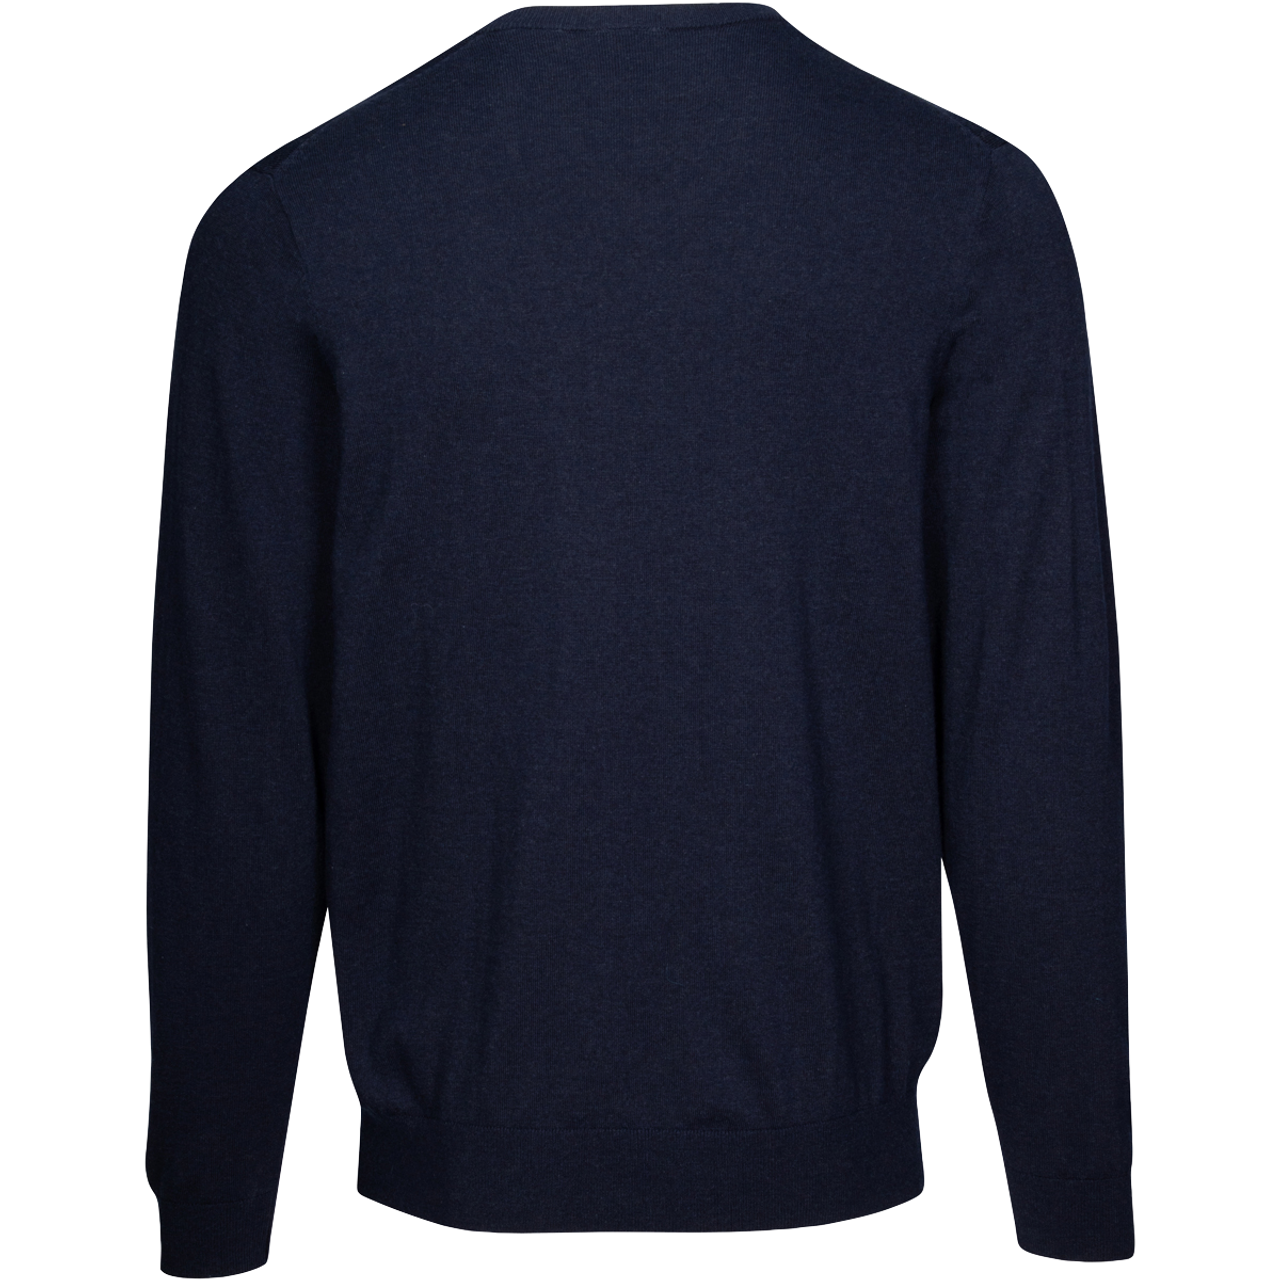 Portman V-Neck Sweater - Dunning